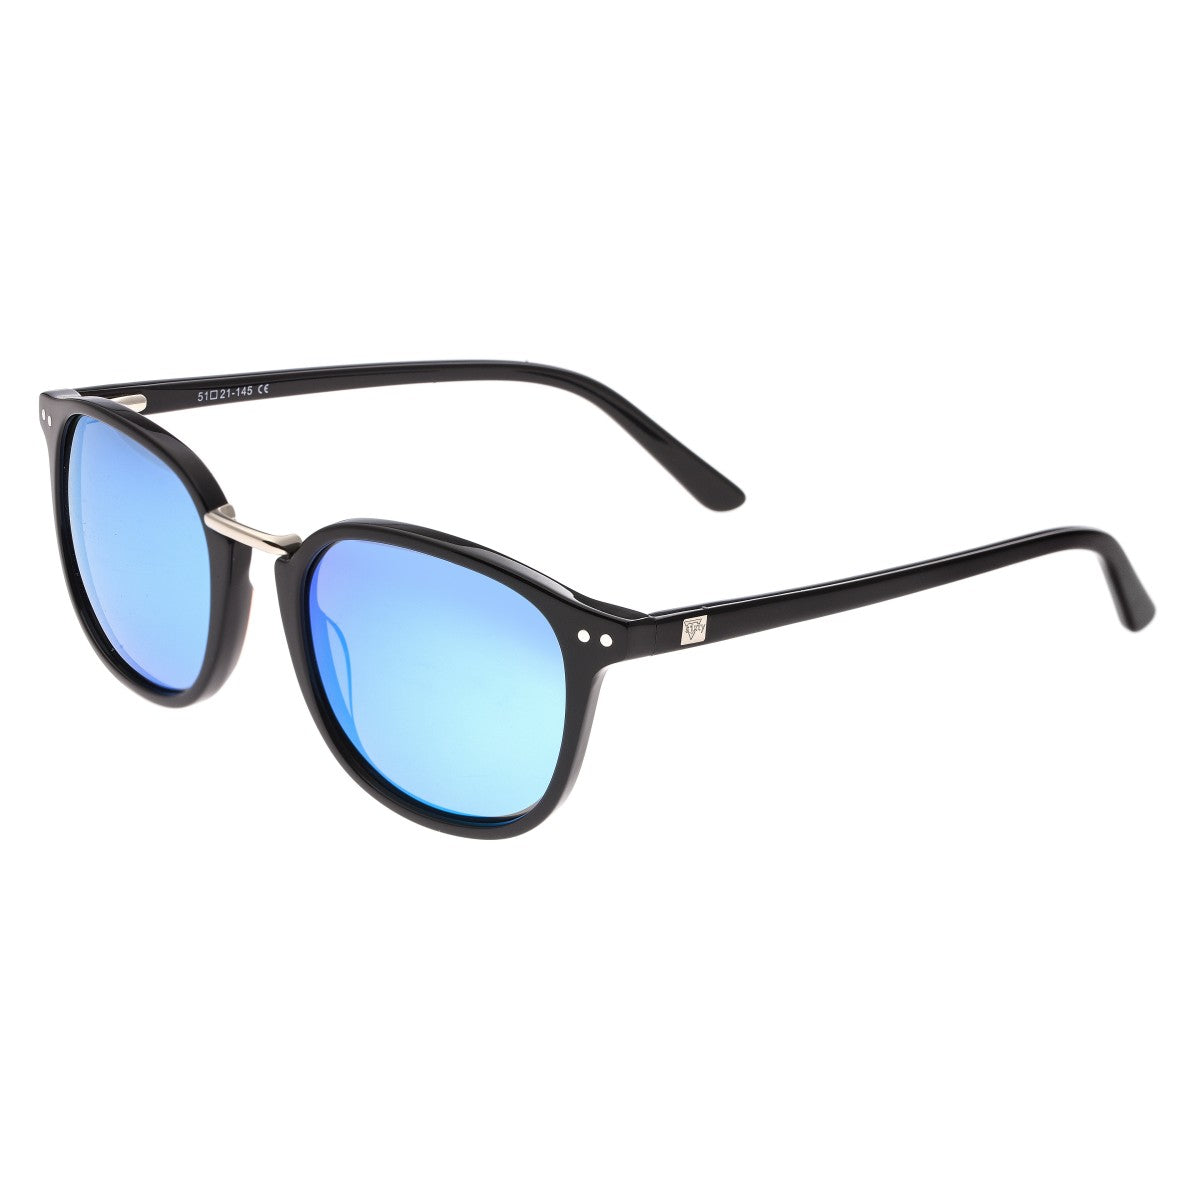 Sixty One Champagne Polarized Sunglasses - Black/Blue - SIXS133BL